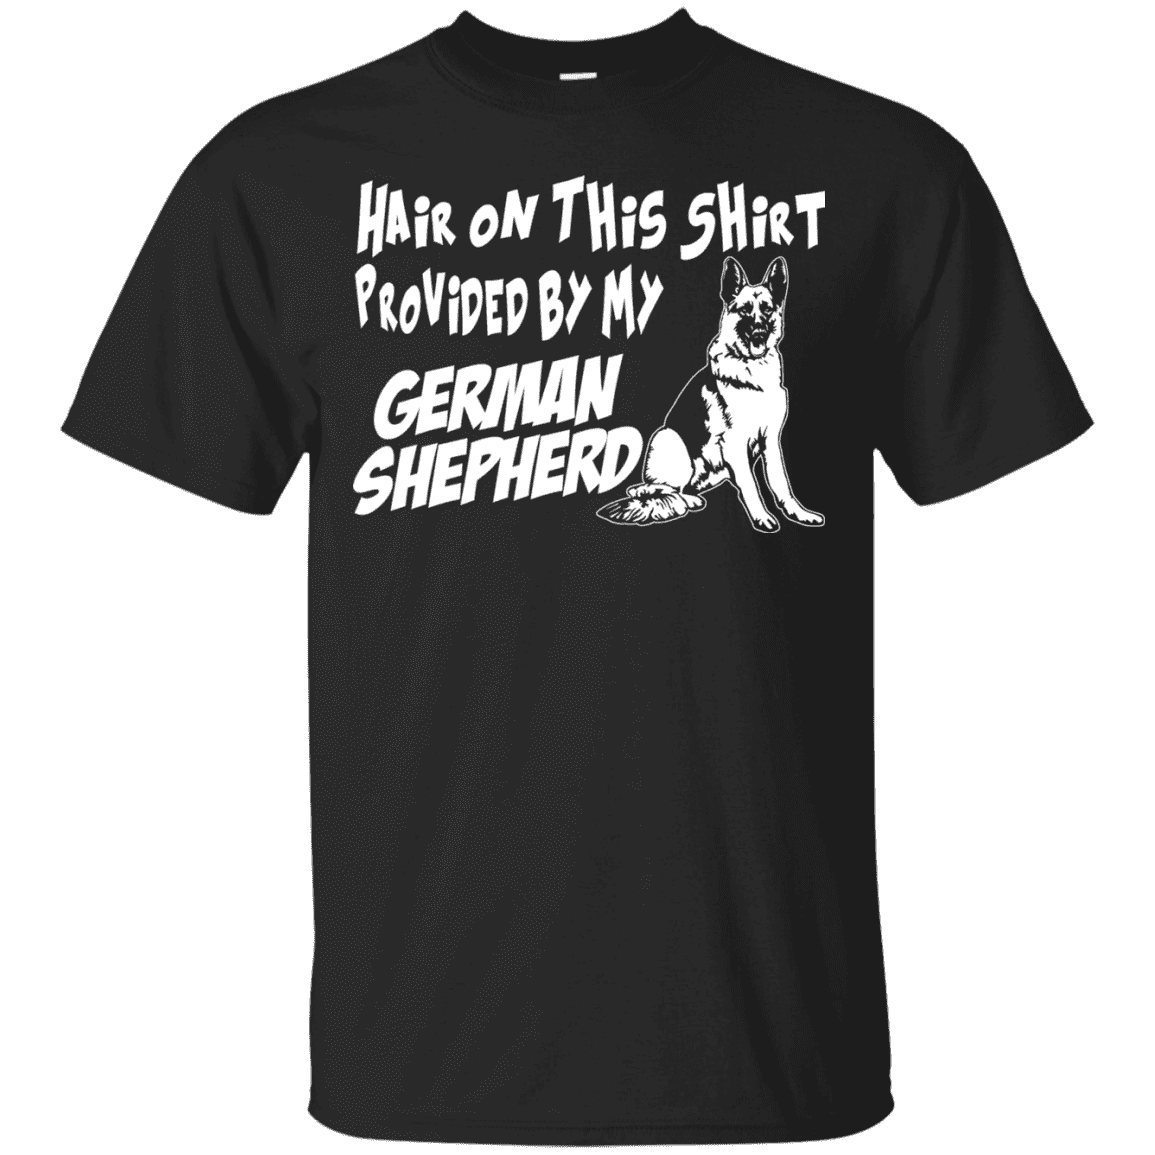 Hair On This Shirt German Shepherd Men Tee - STUDIO 11 COUTURE